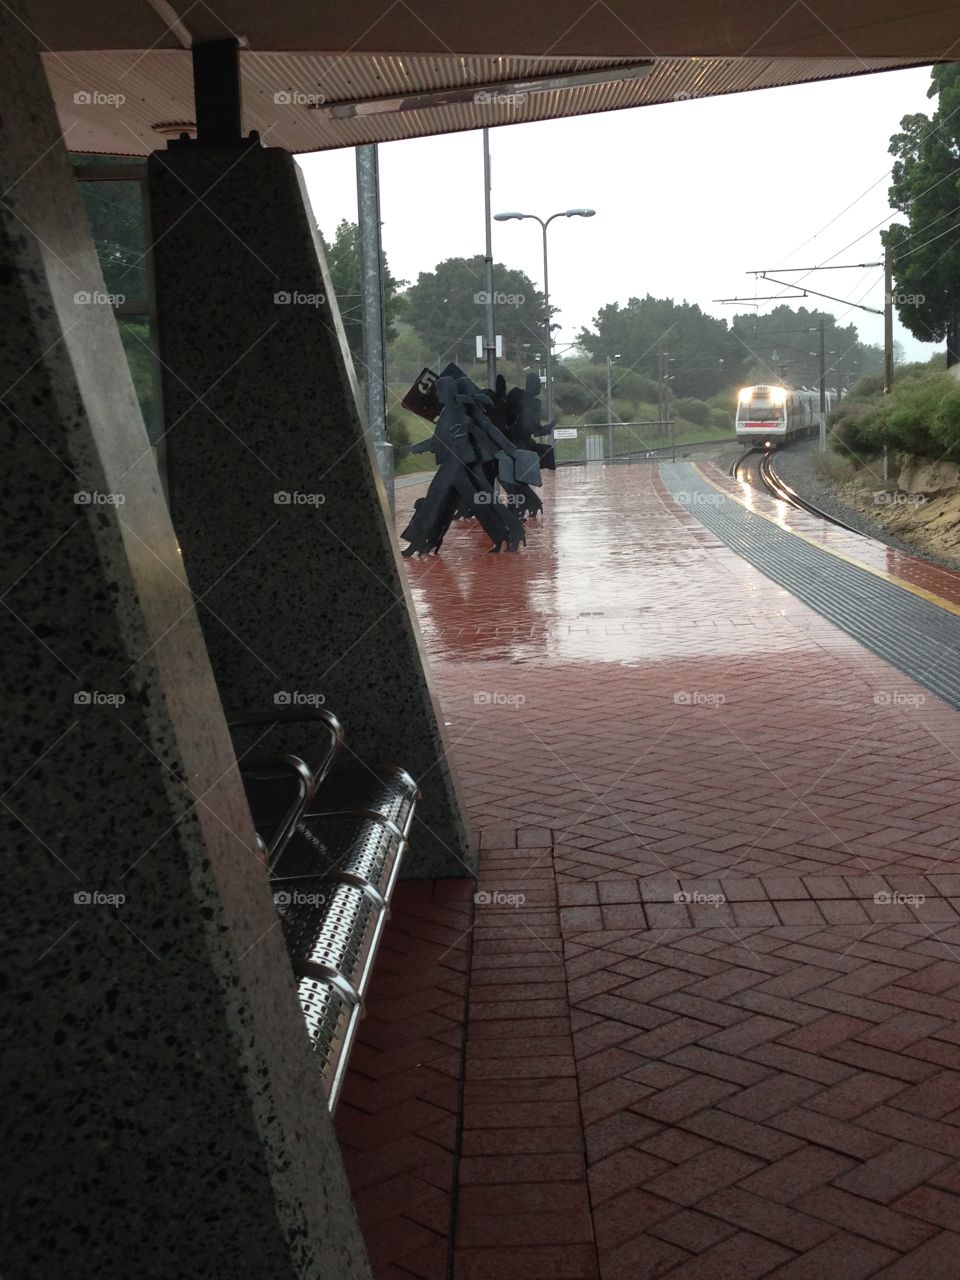 Rainy day at the train station. 